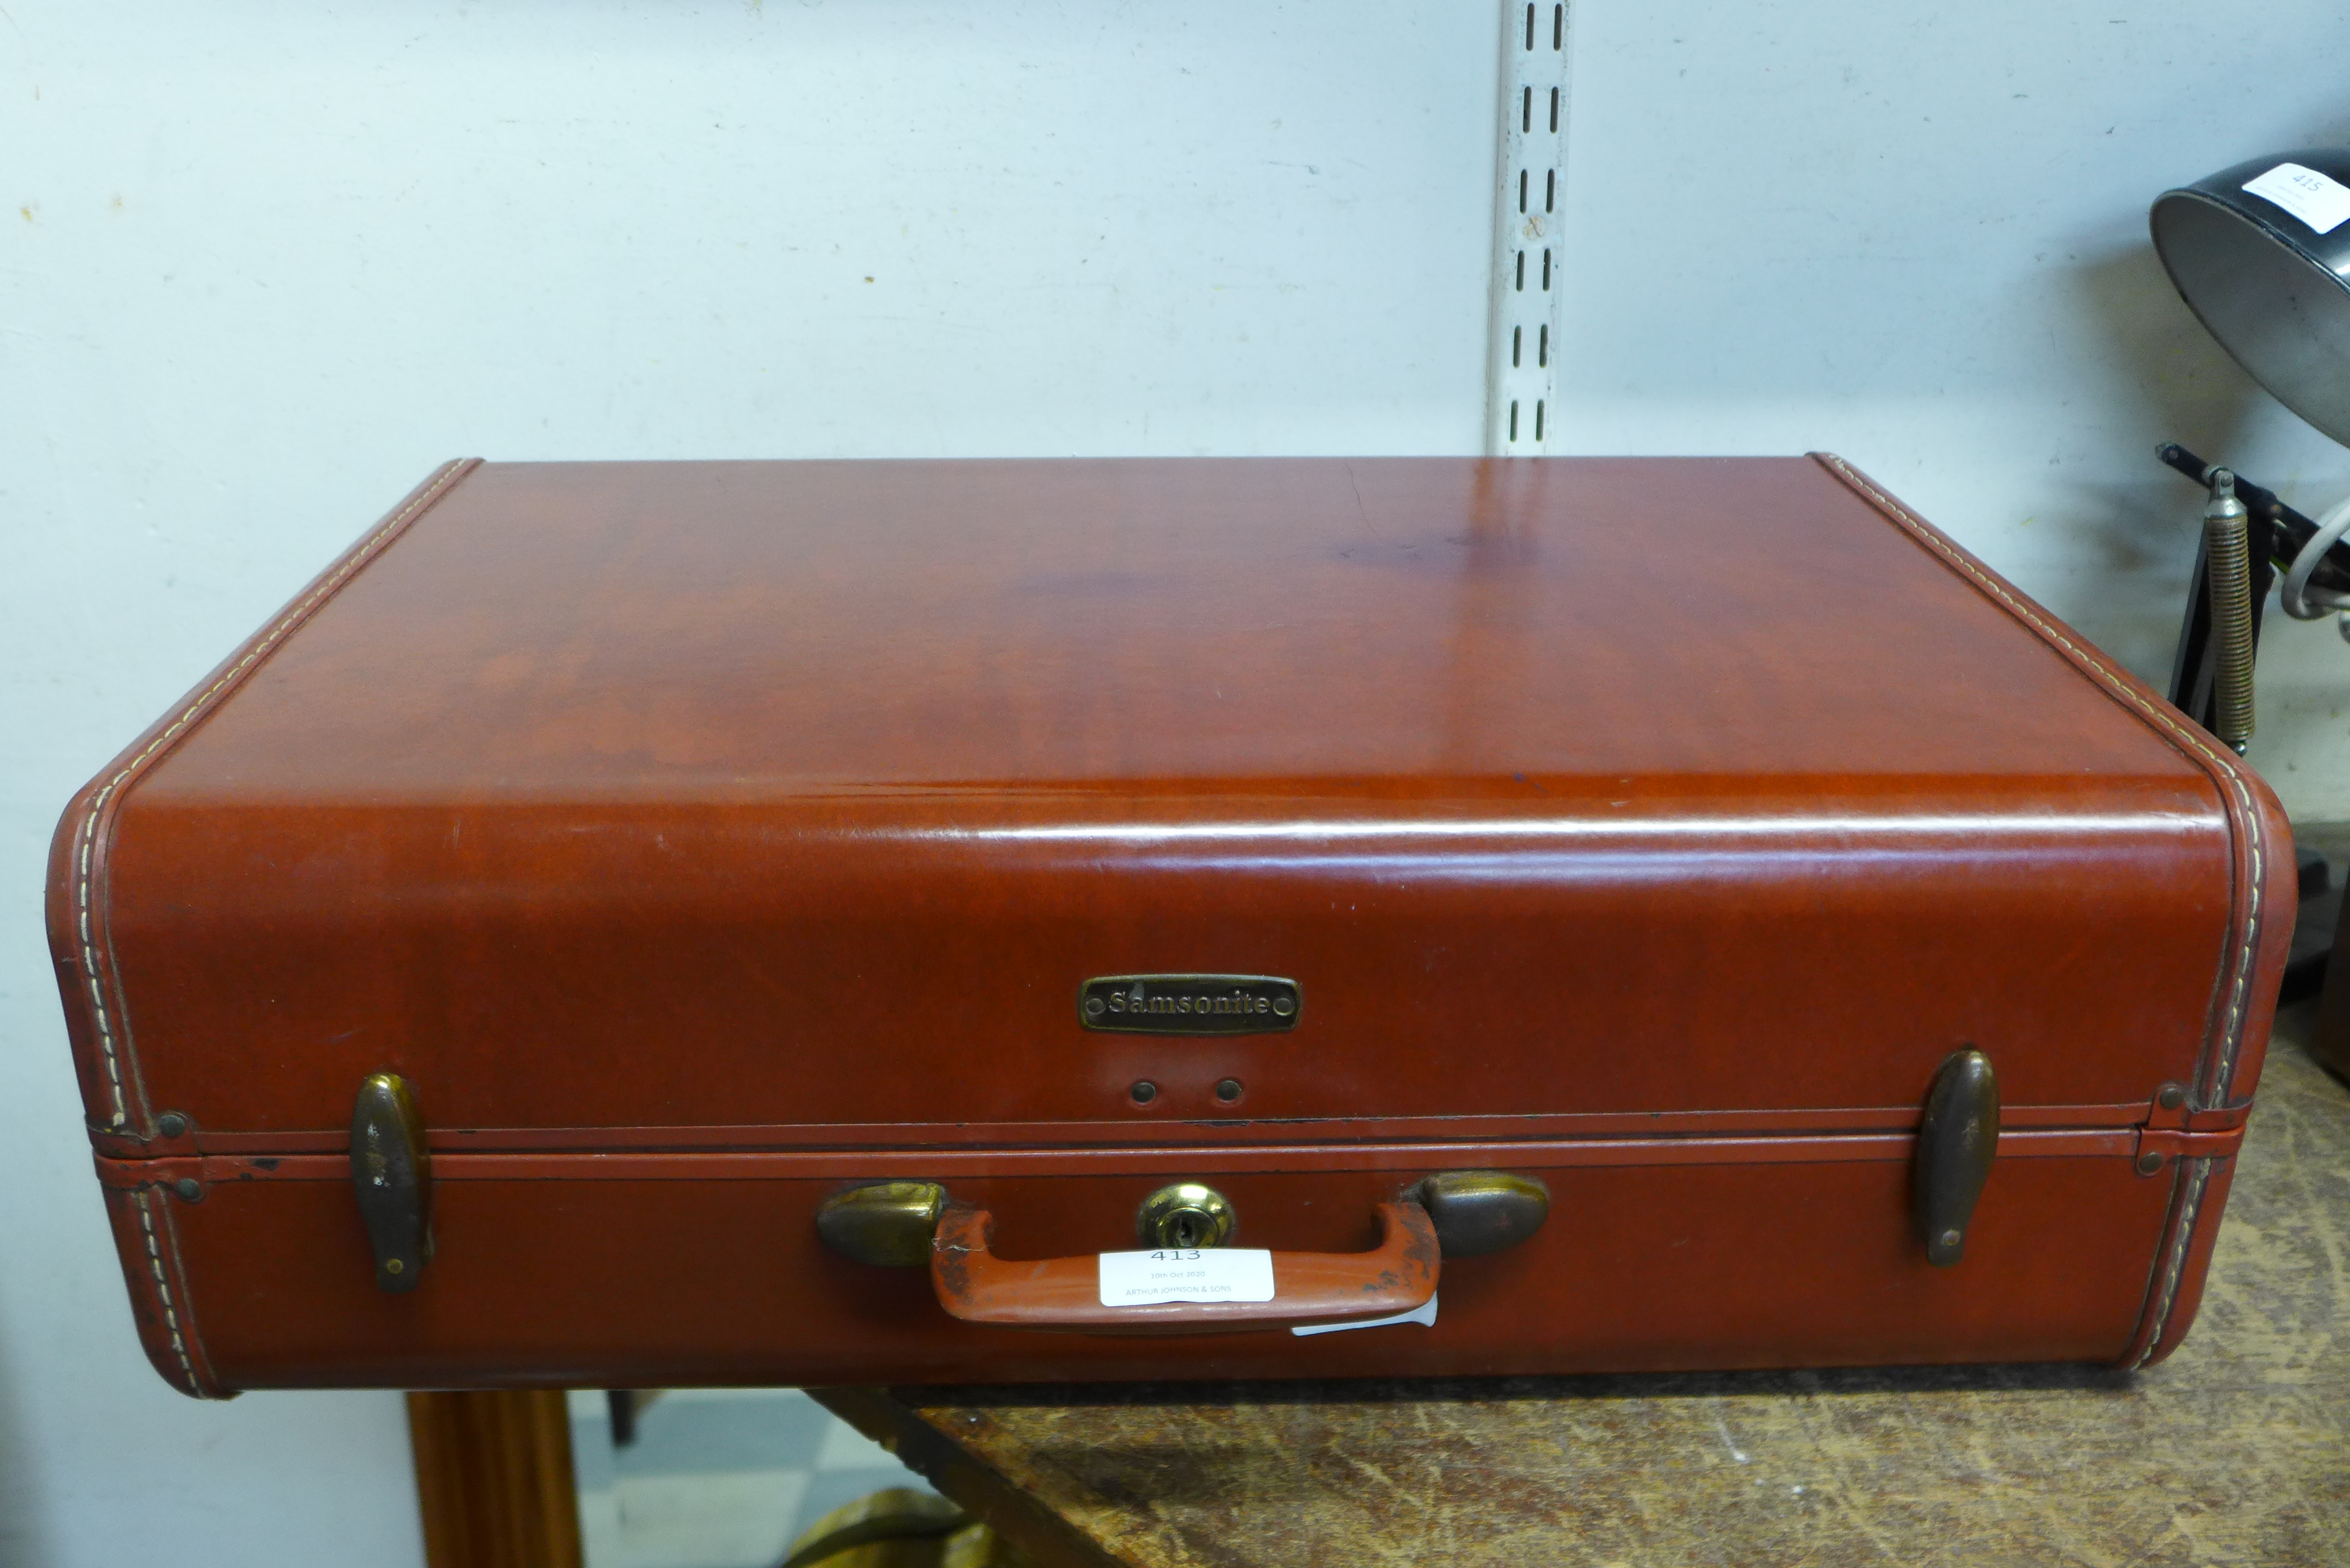 A Samsonite suitcase (no key)